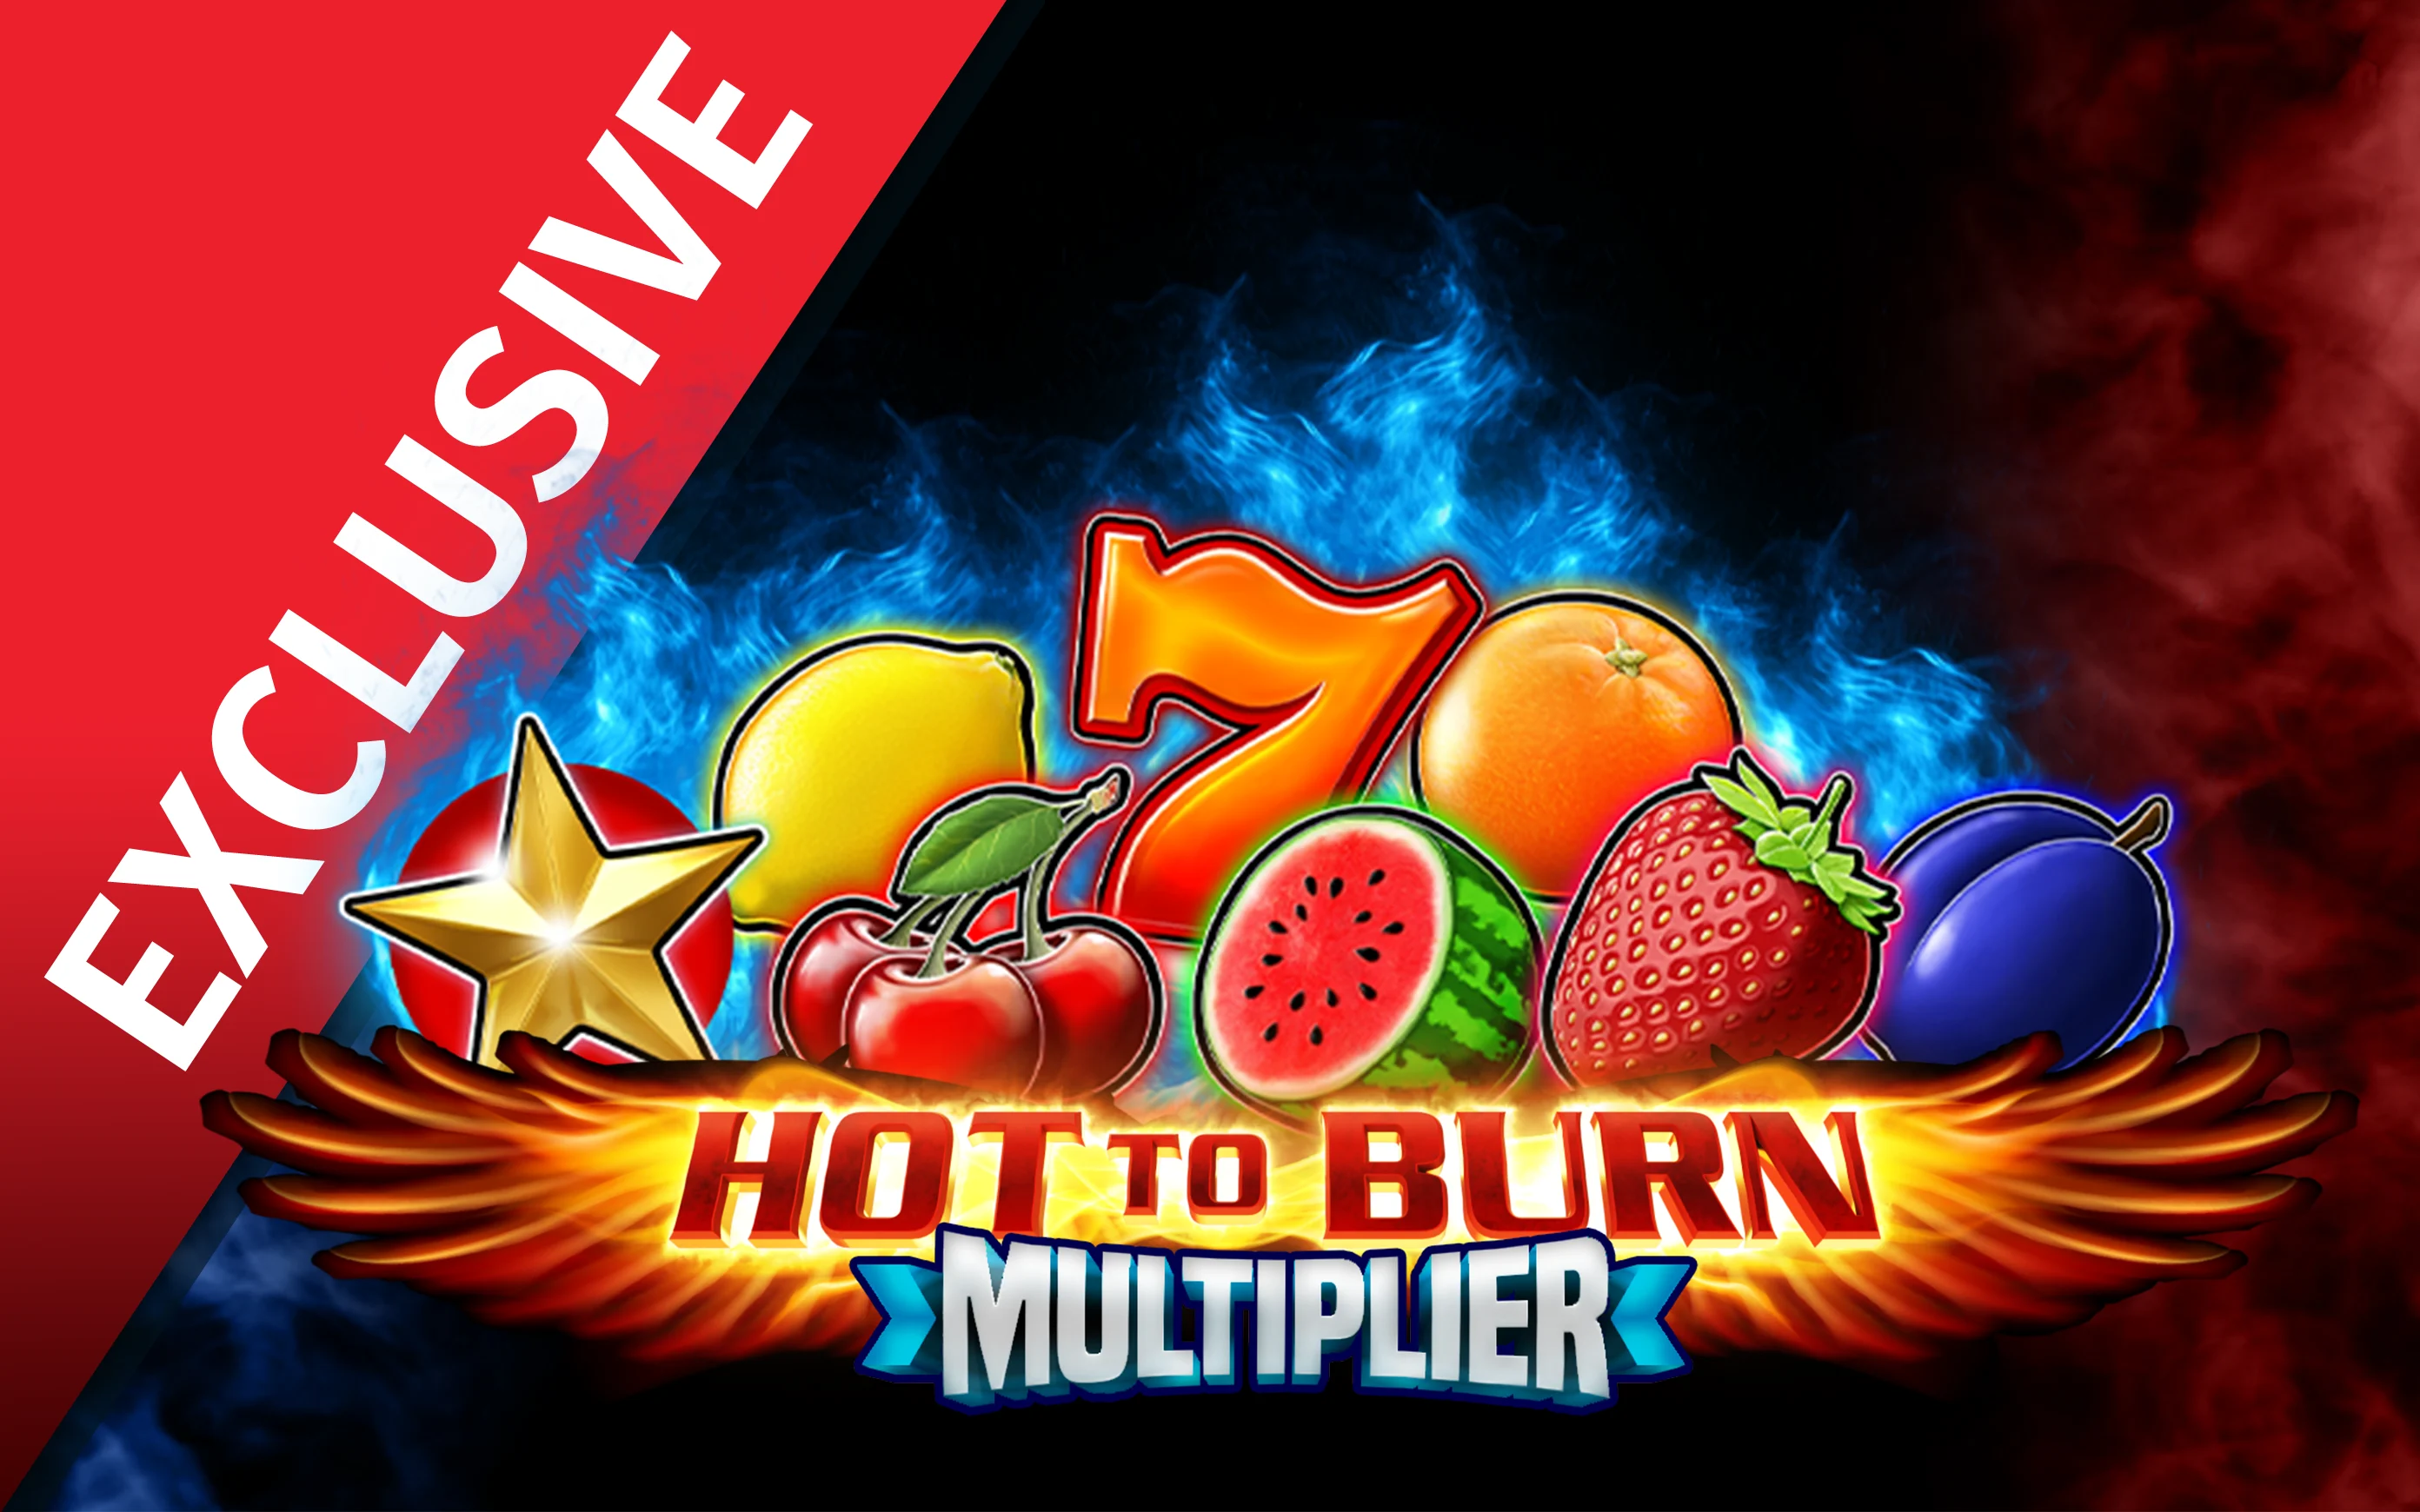 Play Hot to Burn Multiplier on Starcasino.be online casino